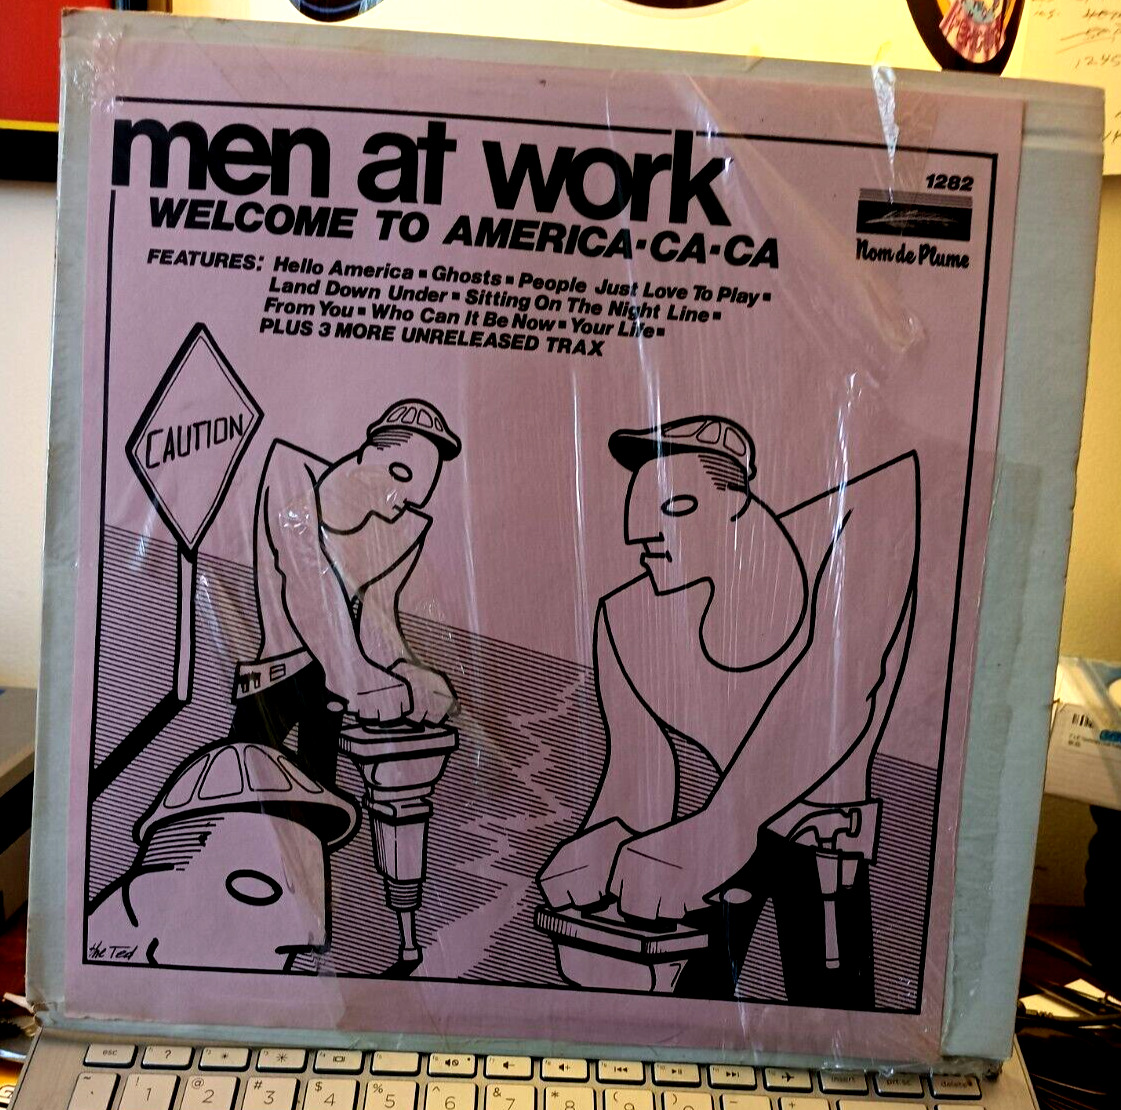 MEN AT WORK - WELCOME TO AMERICA- CA- CA /  NOM de PLUME RECORDS 1282 - RARE